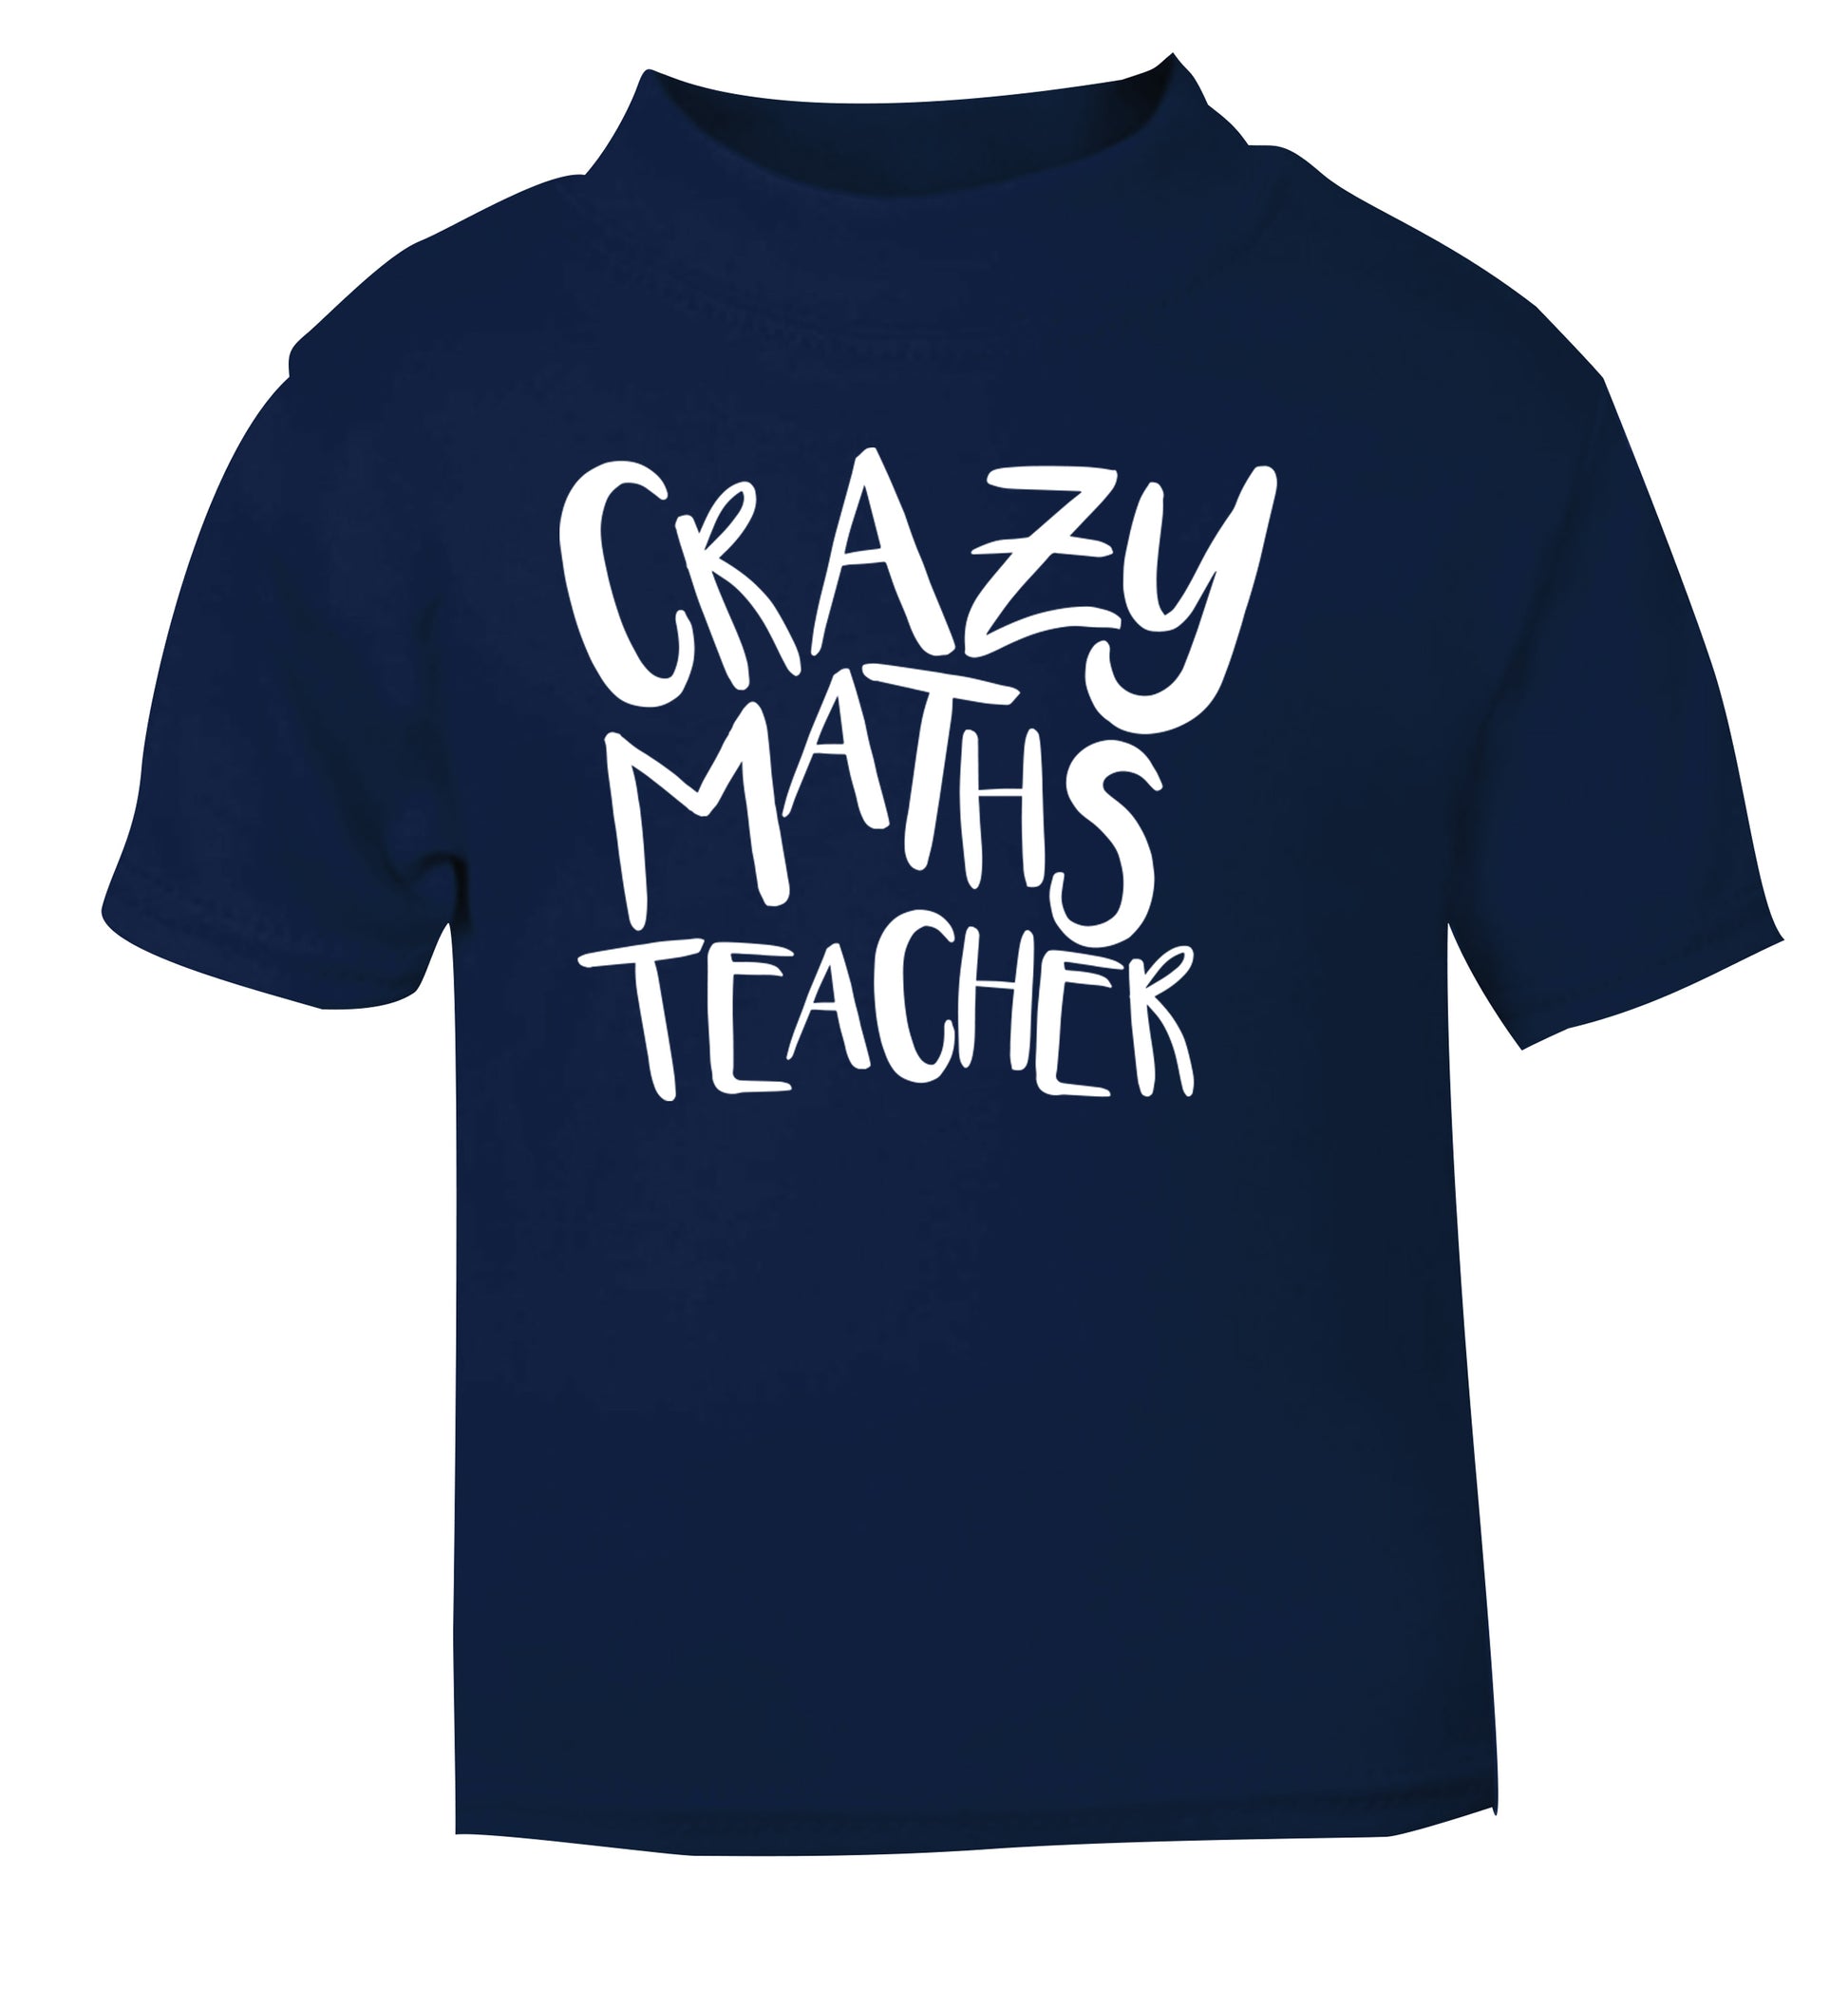 Crazy maths teacher navy Baby Toddler Tshirt 2 Years